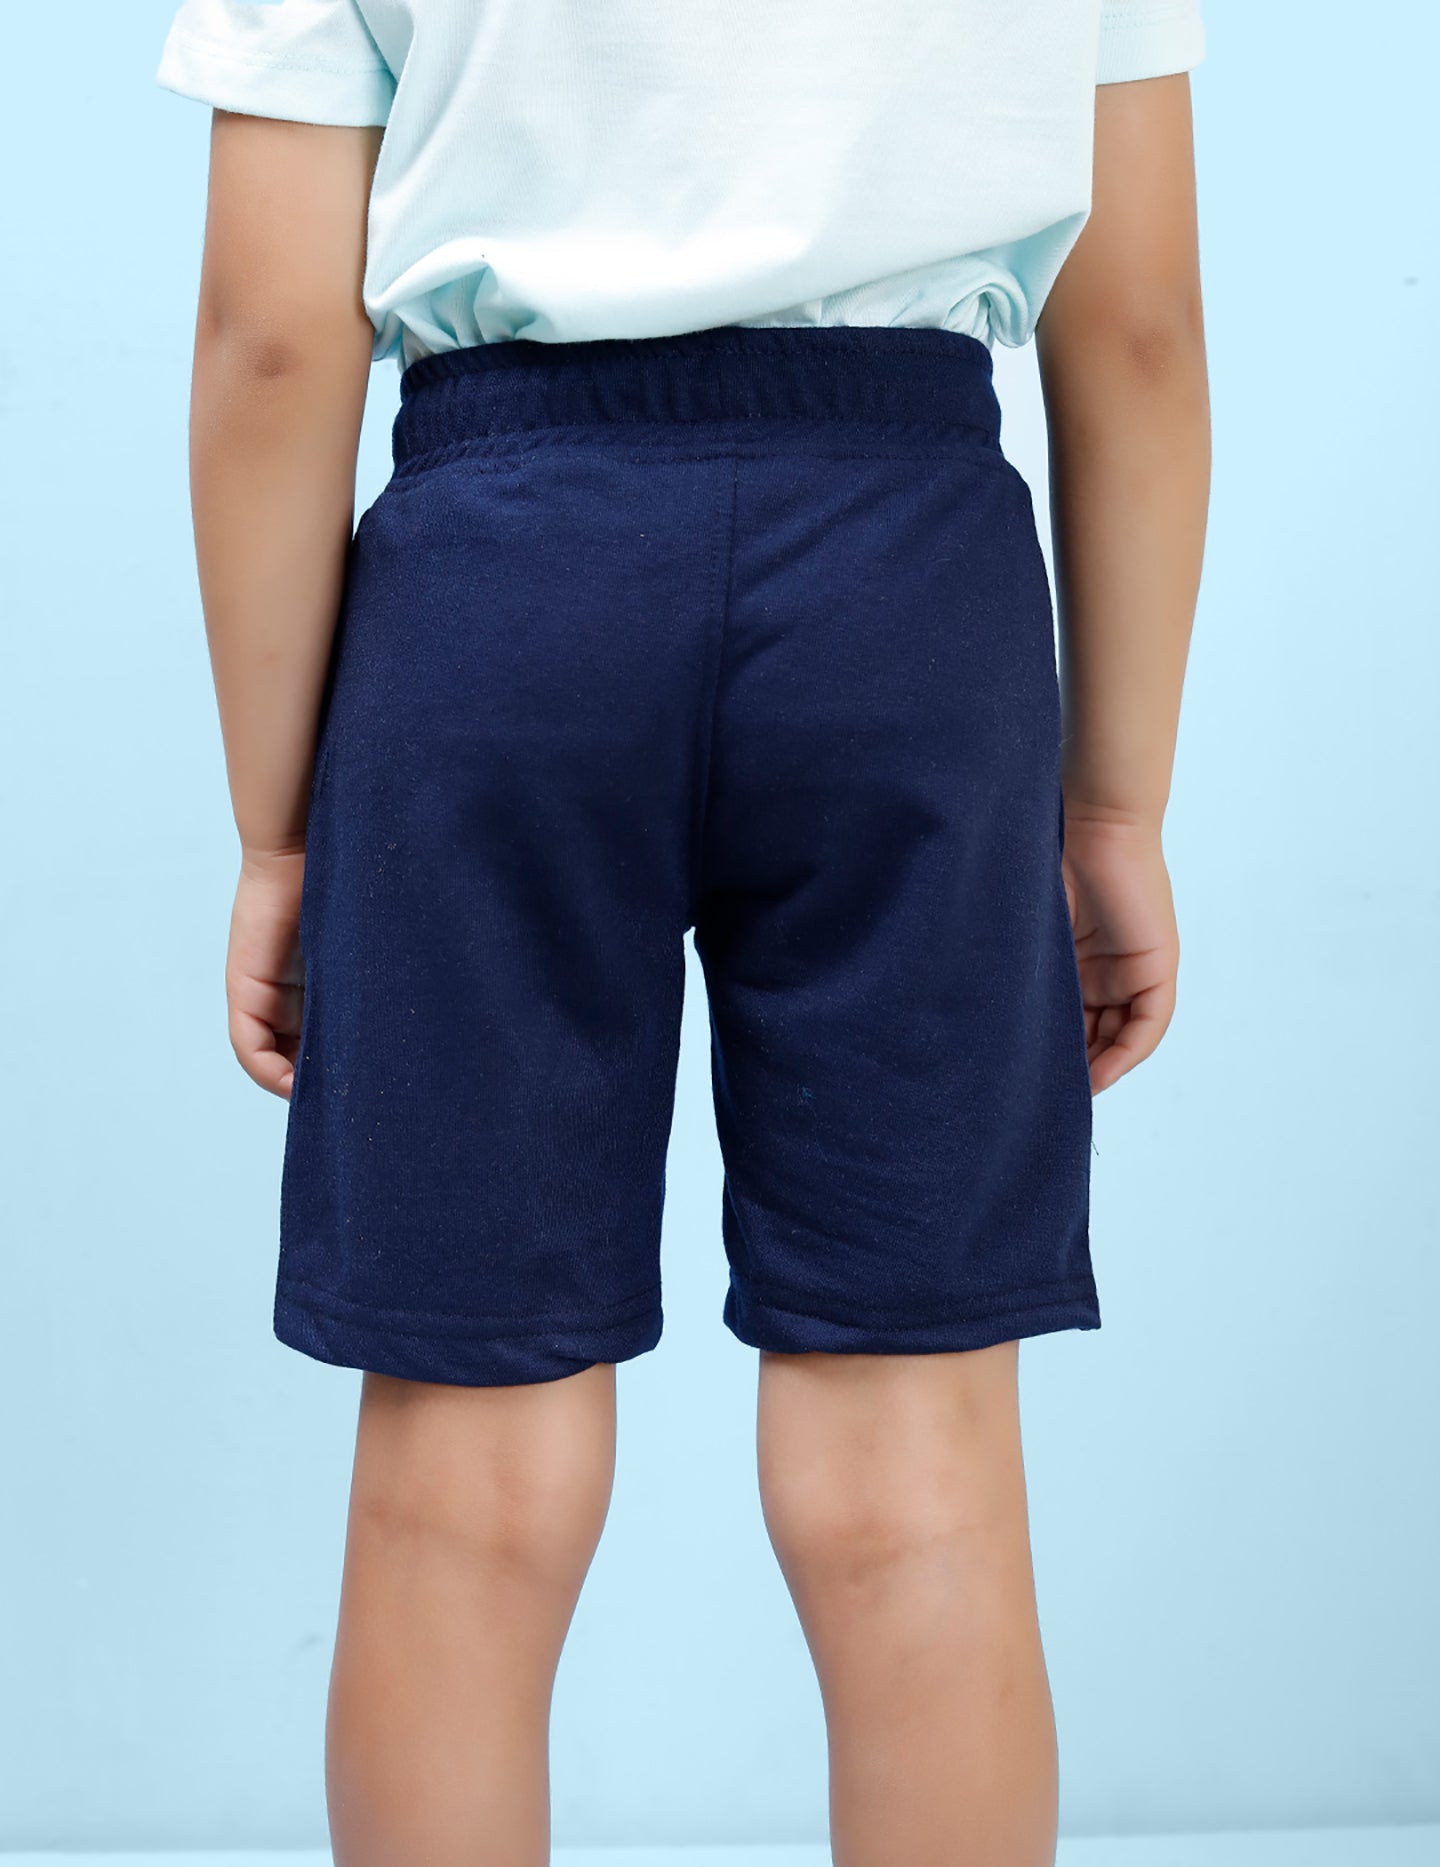 Nusyl Smile Printed Navy Blue Boys Shorts